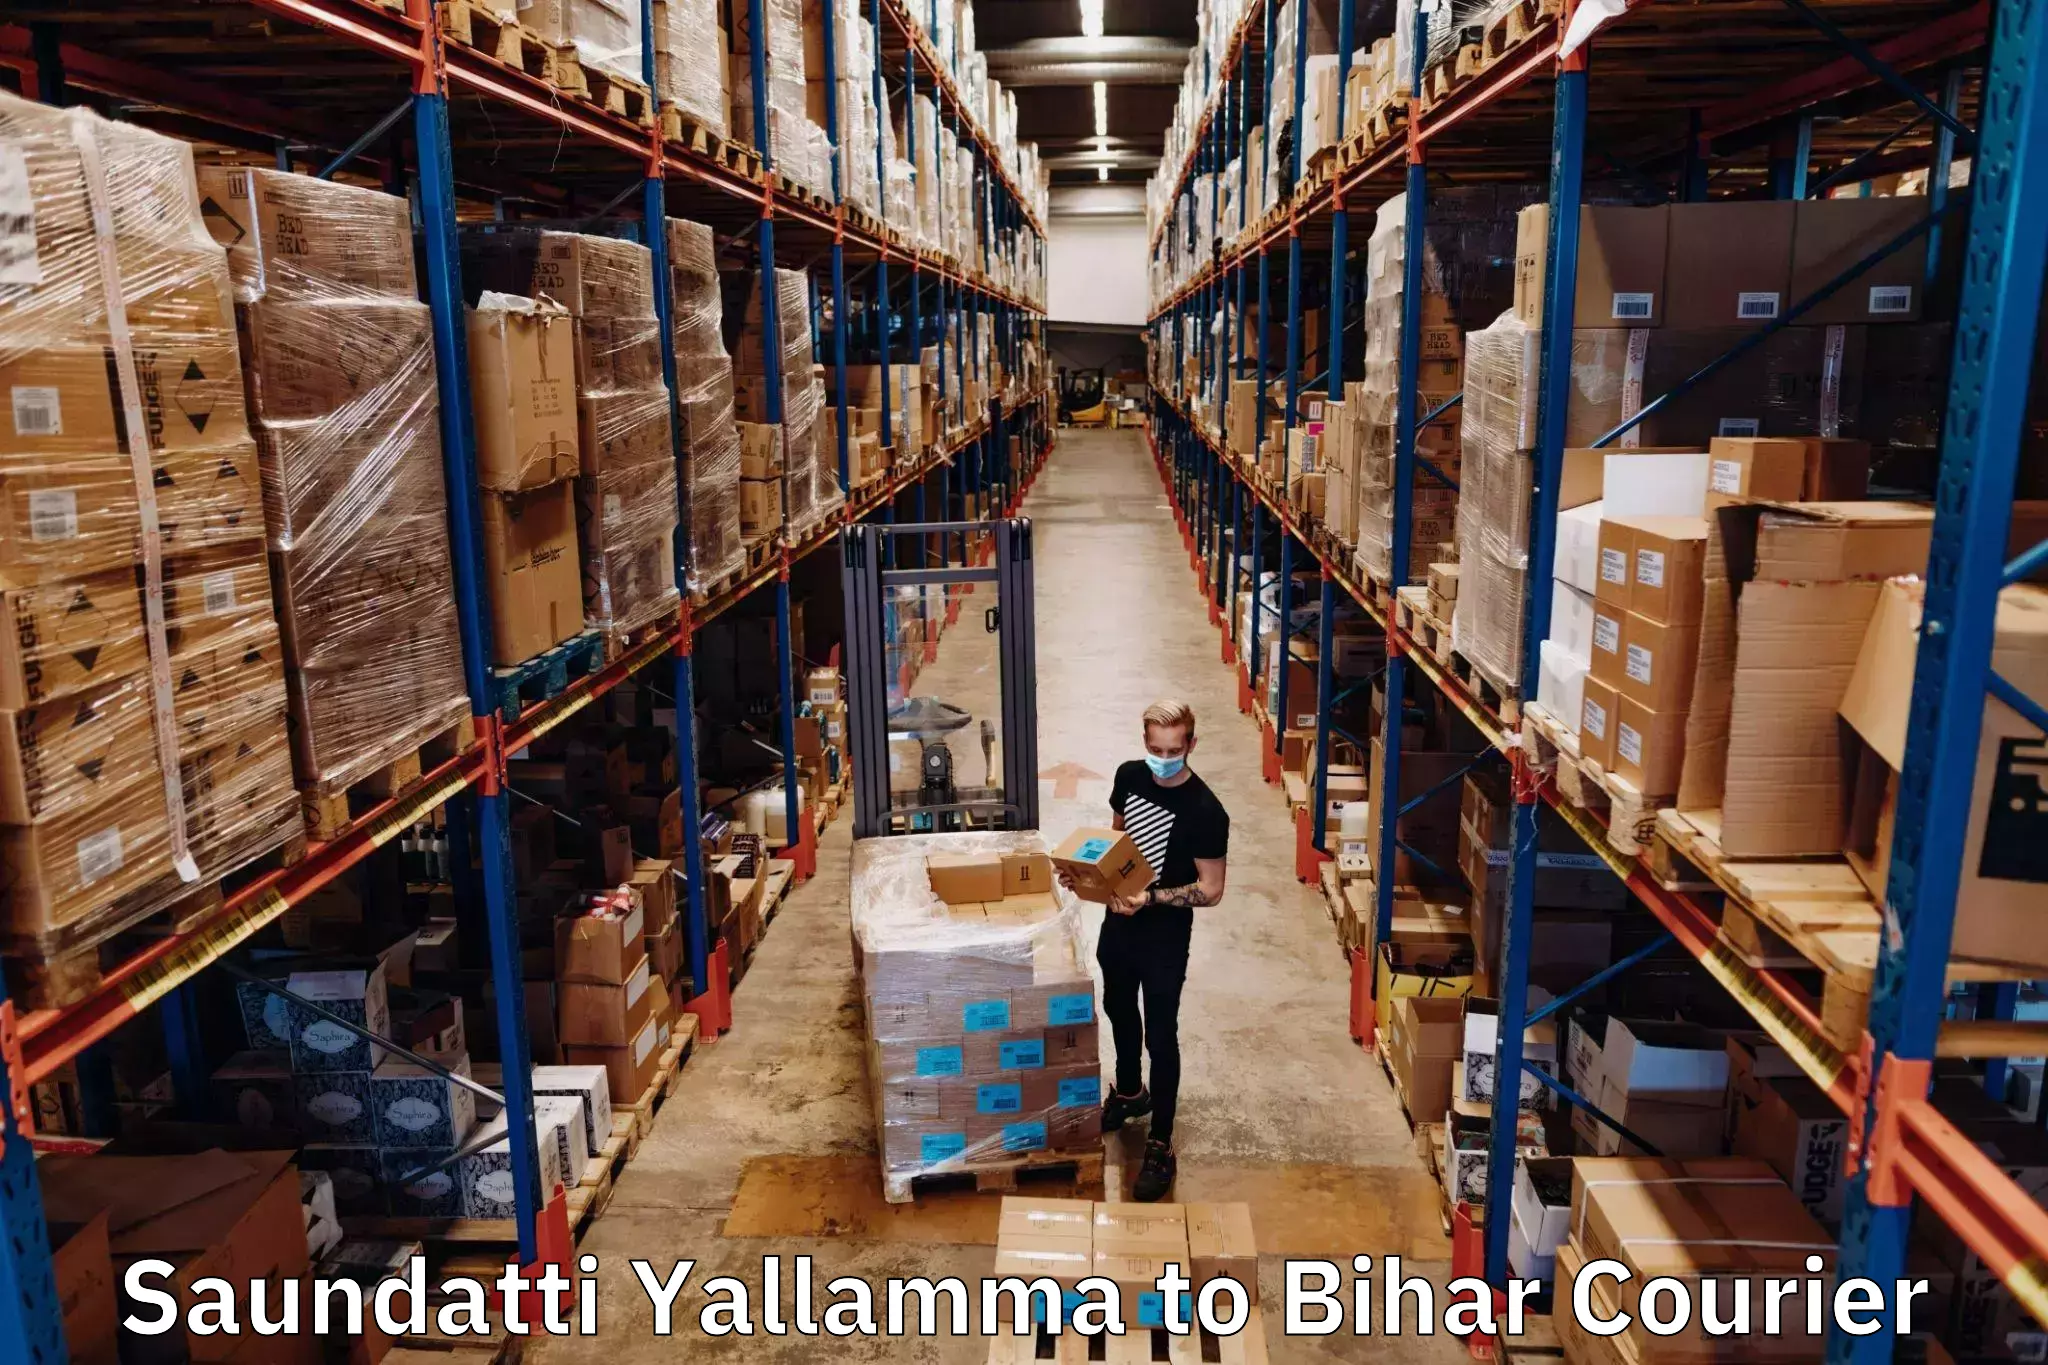 Courier service partnerships Saundatti Yallamma to Wazirganj